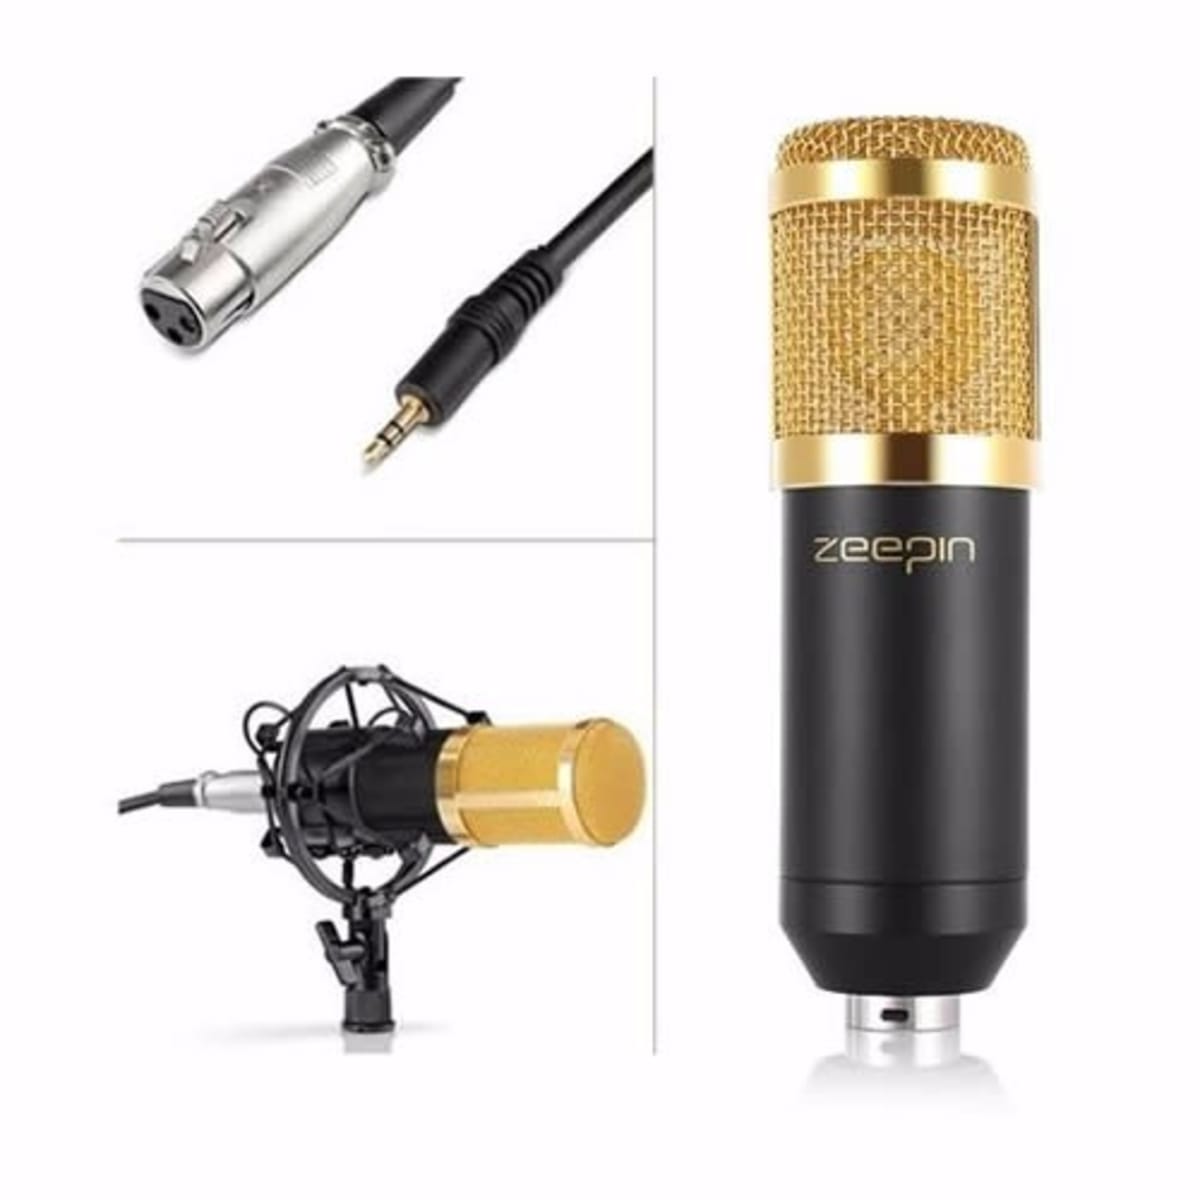 BM 800 Studio Microphone For Podcasters - Black